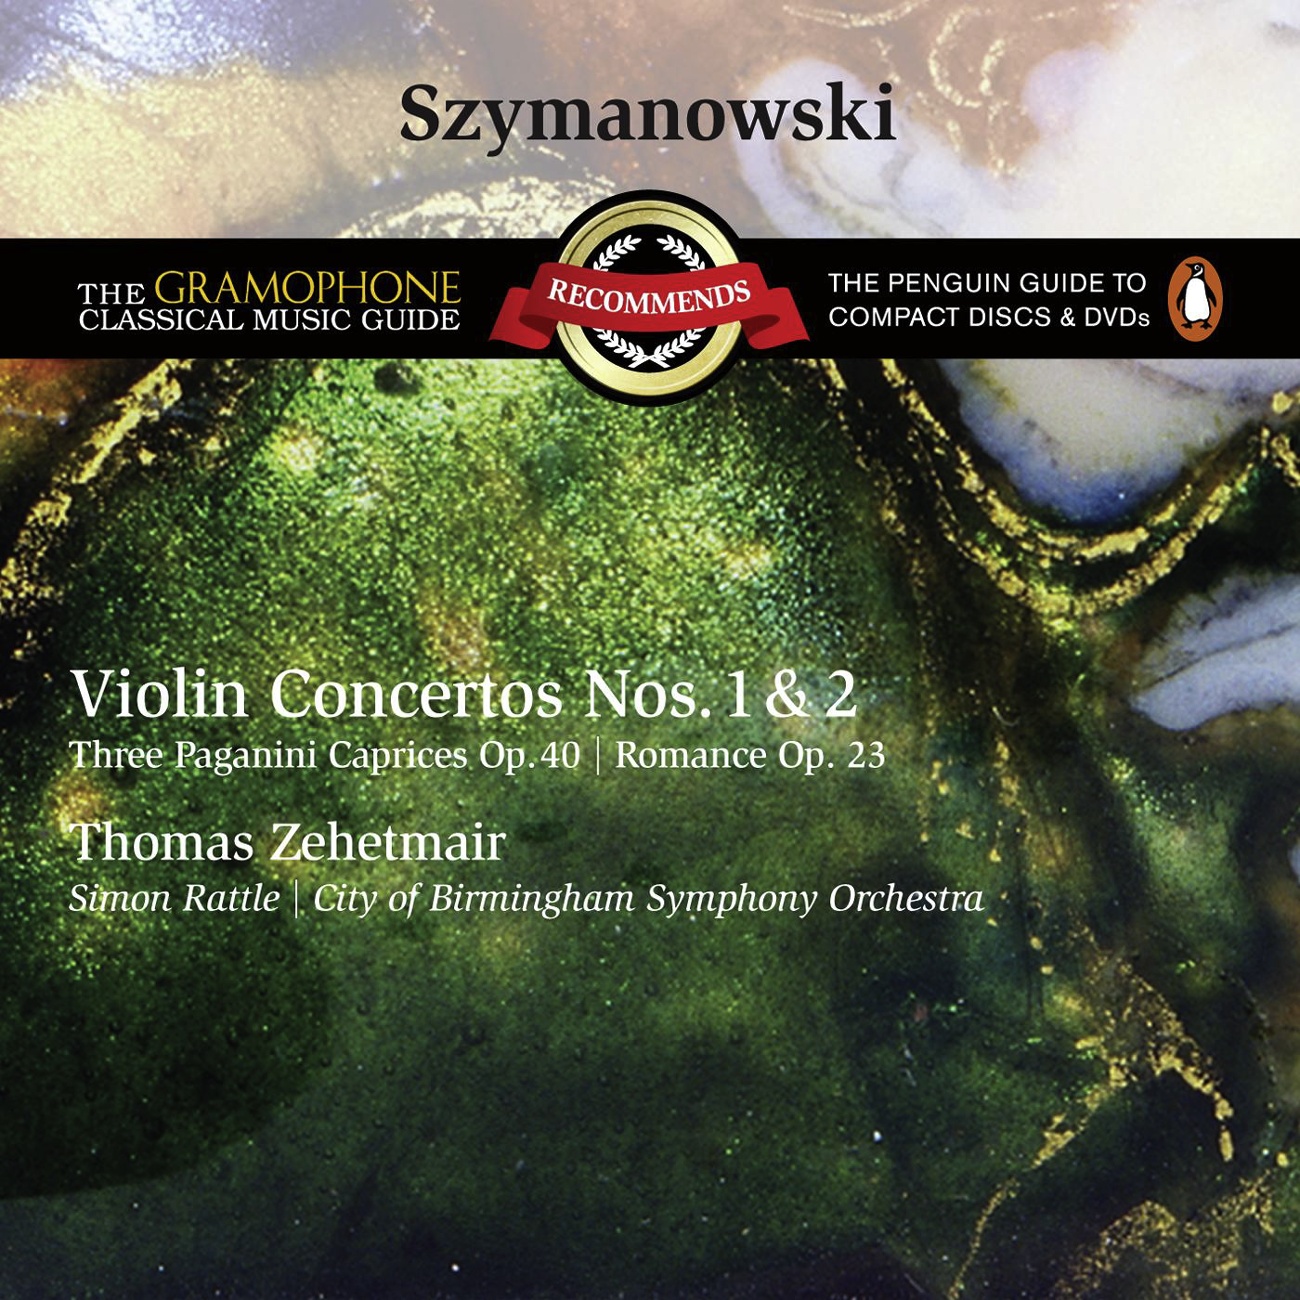 Violin Concerto No. 1 Op. 35: Cadenza (Vivace) - Allegro moderato - Lento assai